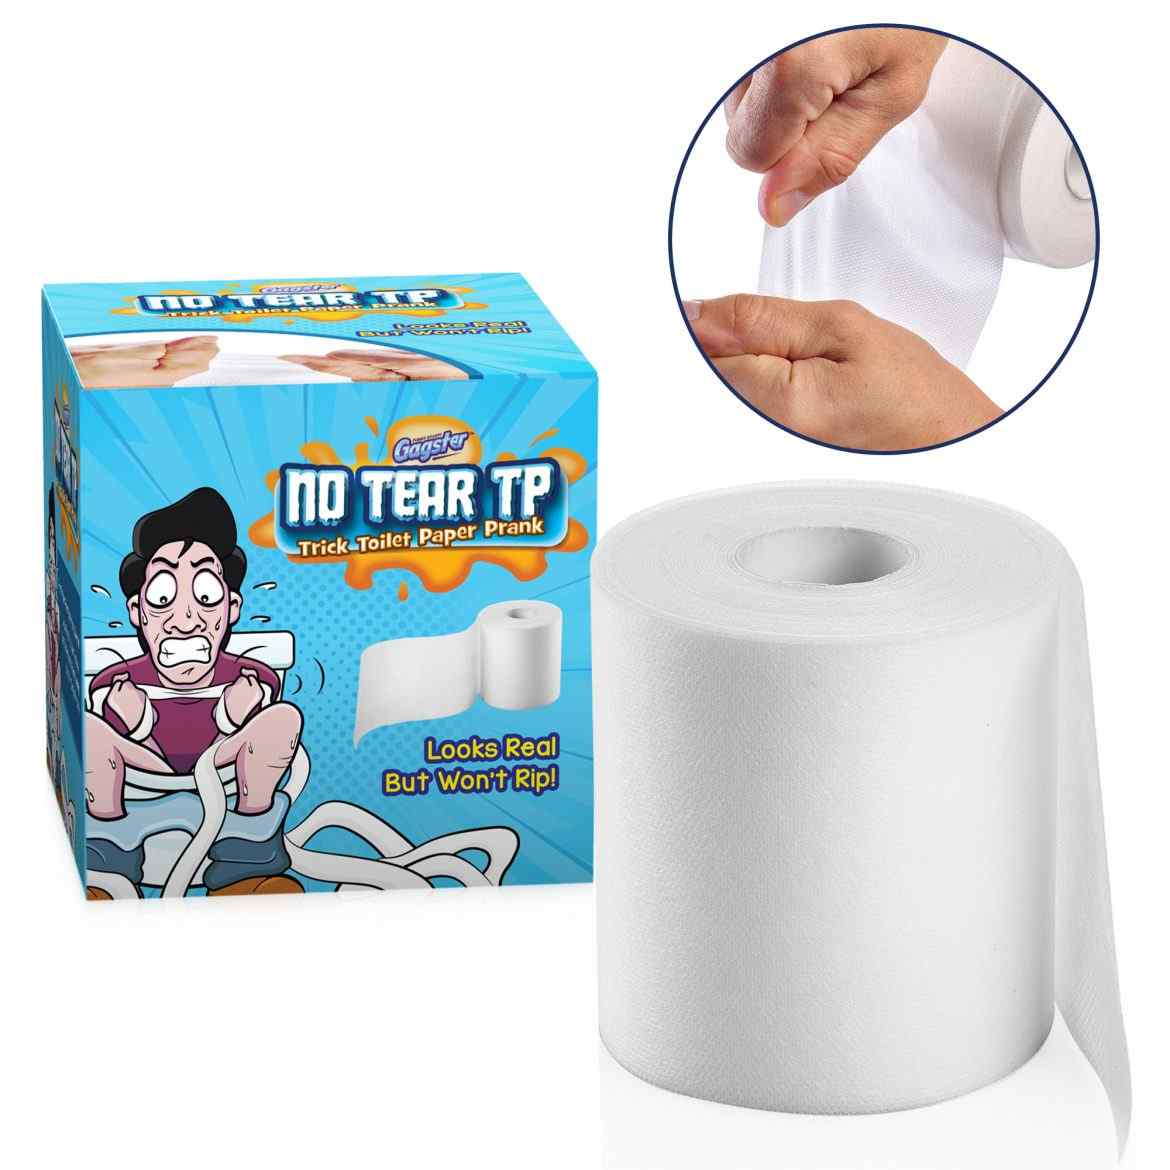 toilet paper roll prank no tear toilet paper roll what is no tear toilet paper no tear toilet paper amazon